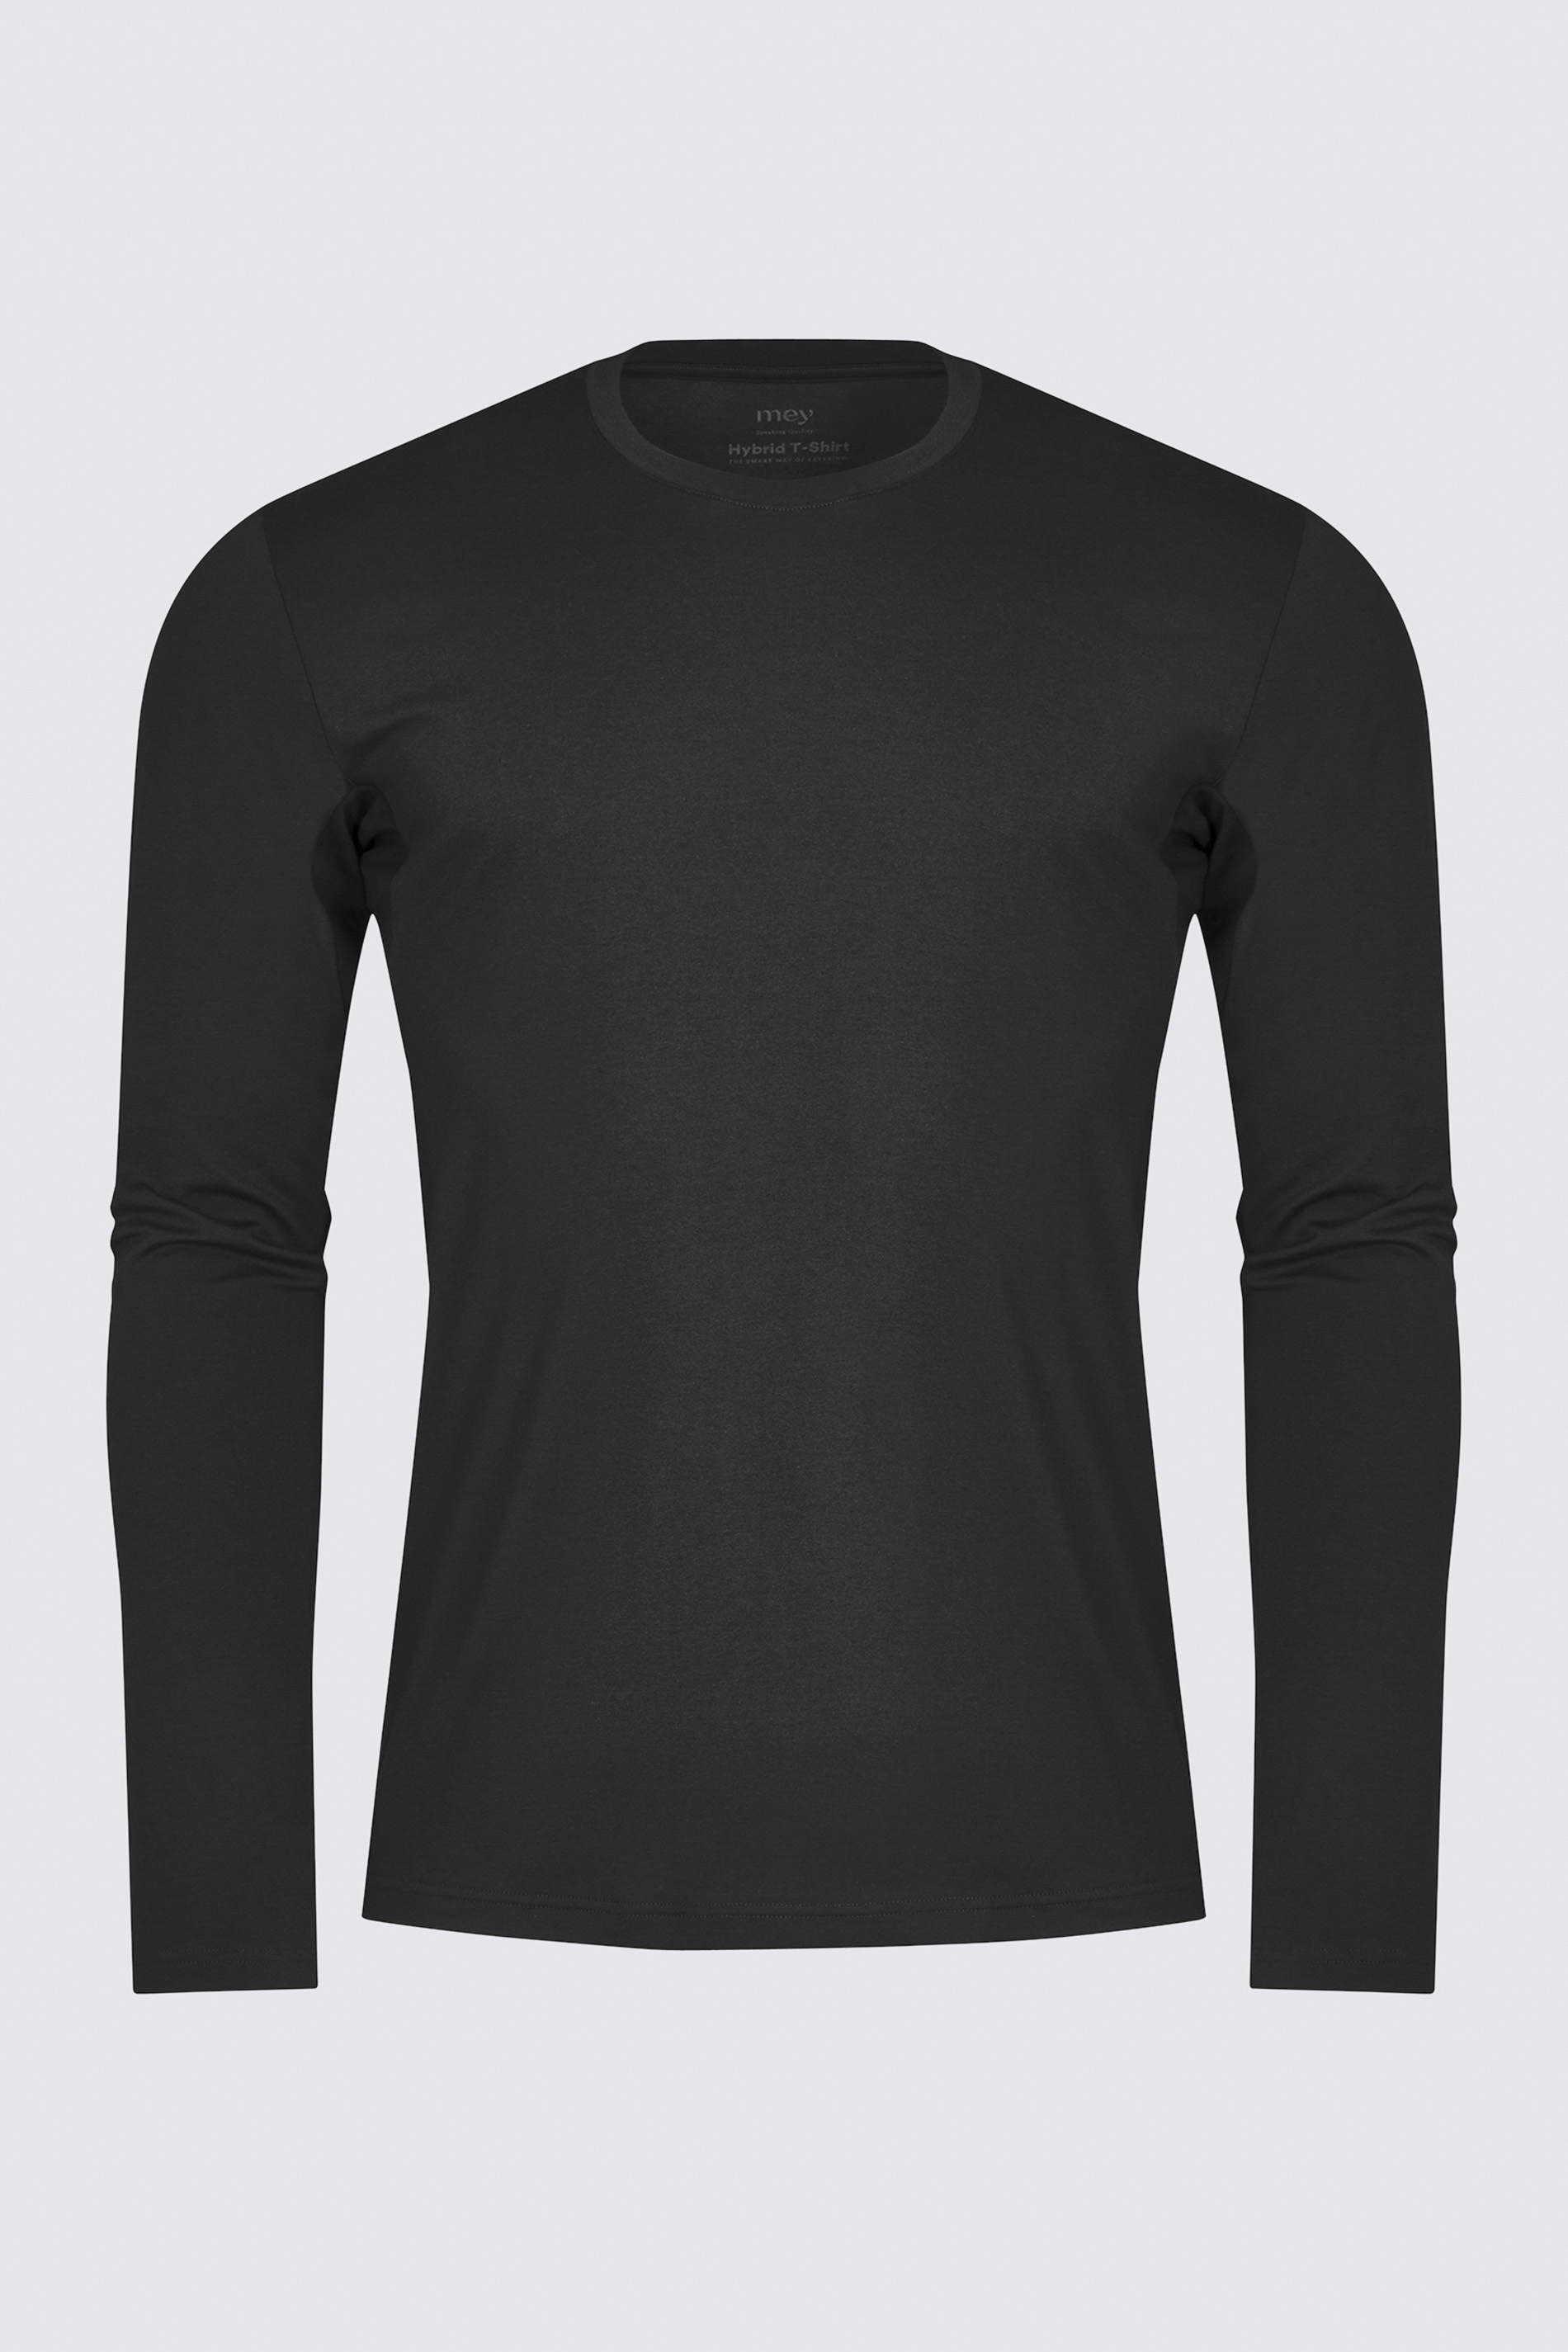 Hybride T-shirt | Lange mouwen Zwart Serie Hybrid T-Shirt Uitknippen | mey®